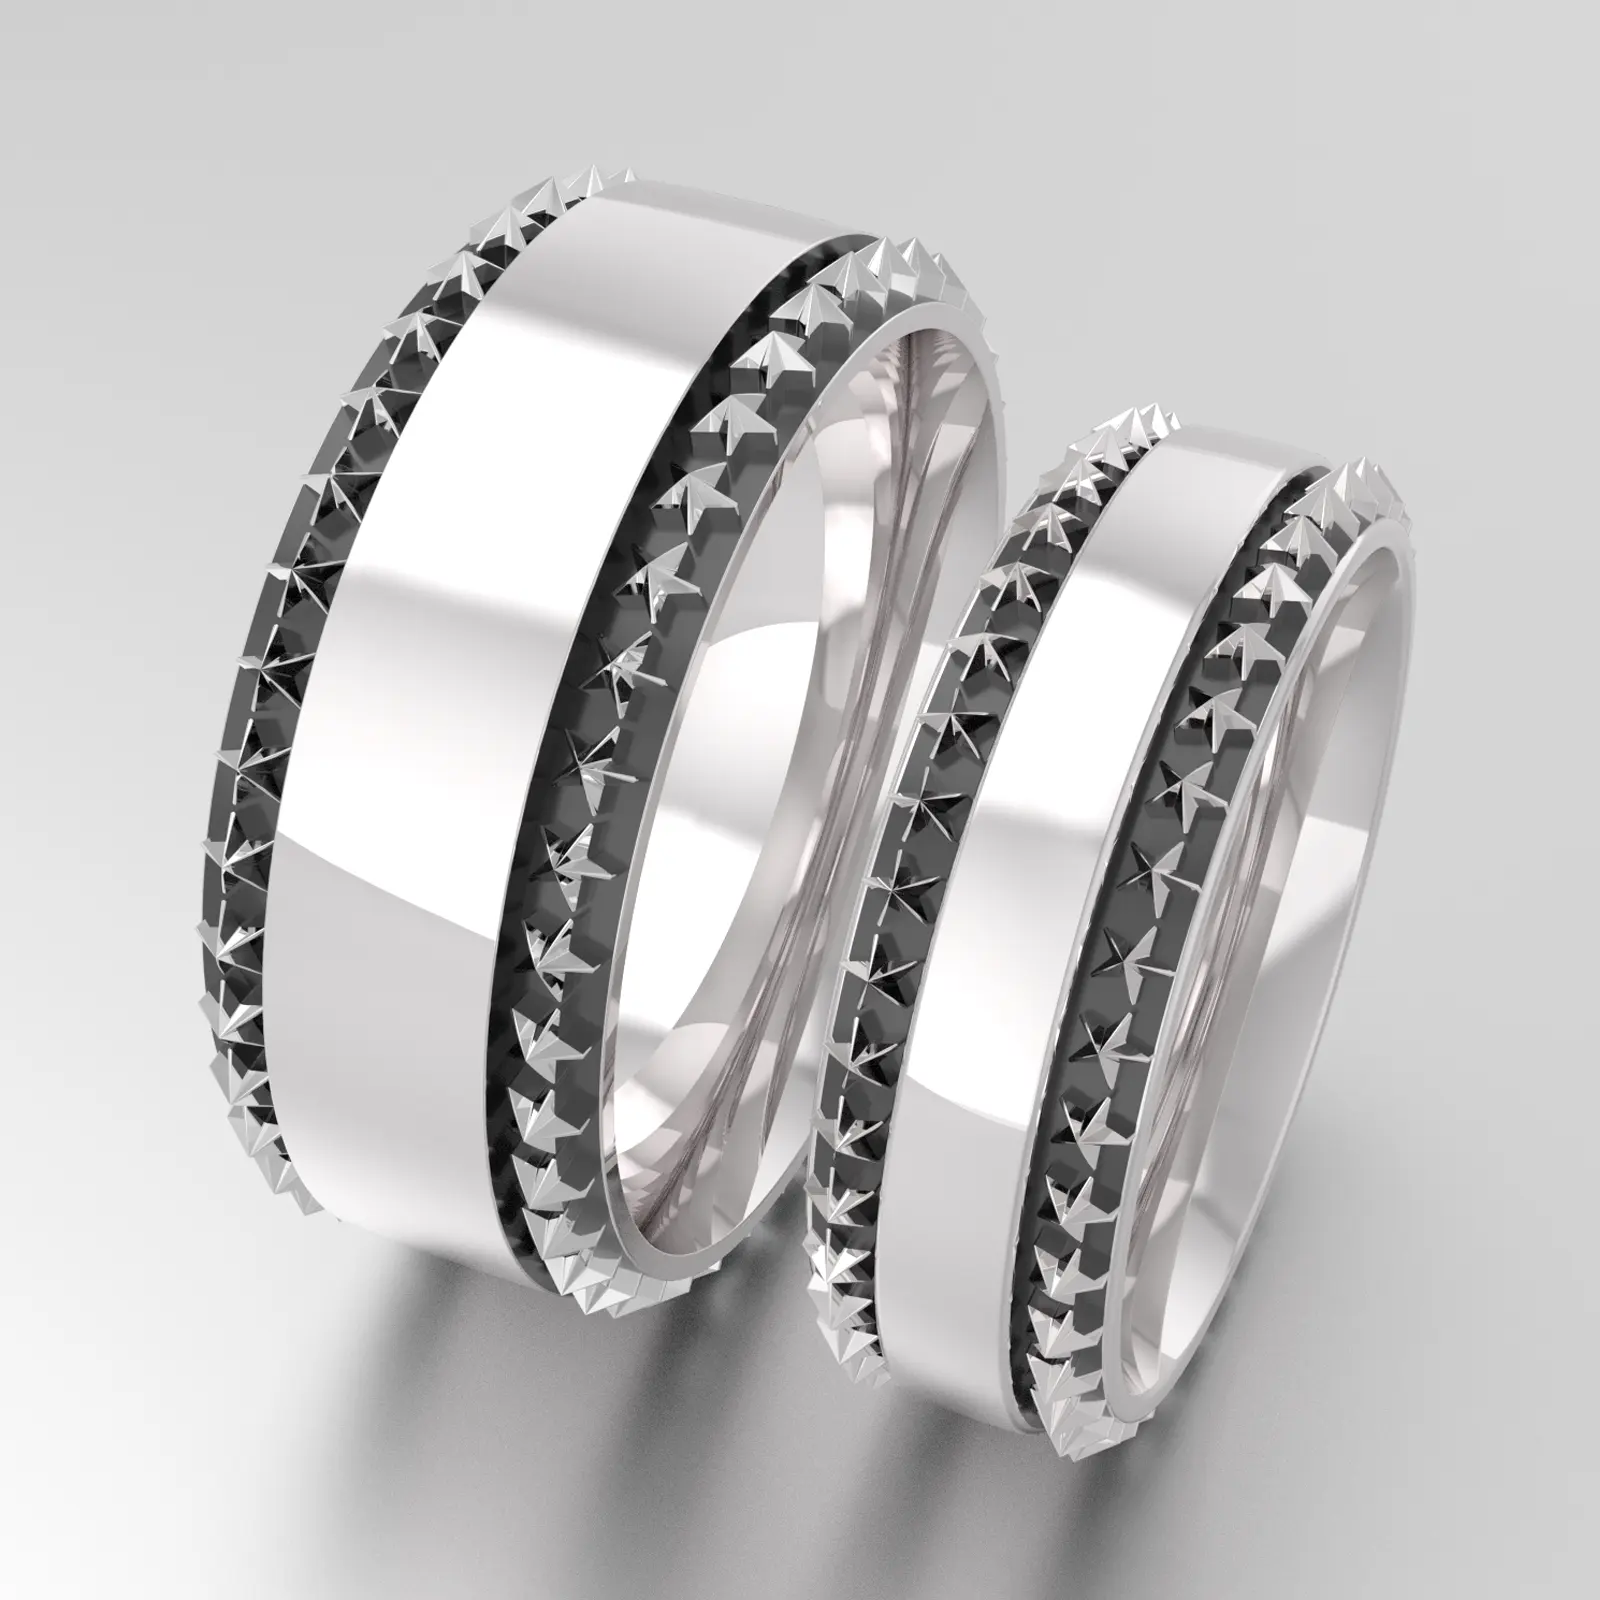 Ringe Zwei Sternen reihen Breite 5,5mm 925 Sterling versilbert Silber Paar Ring beschichtung 7,5mm Anillo De La Pareja Joyas Plata